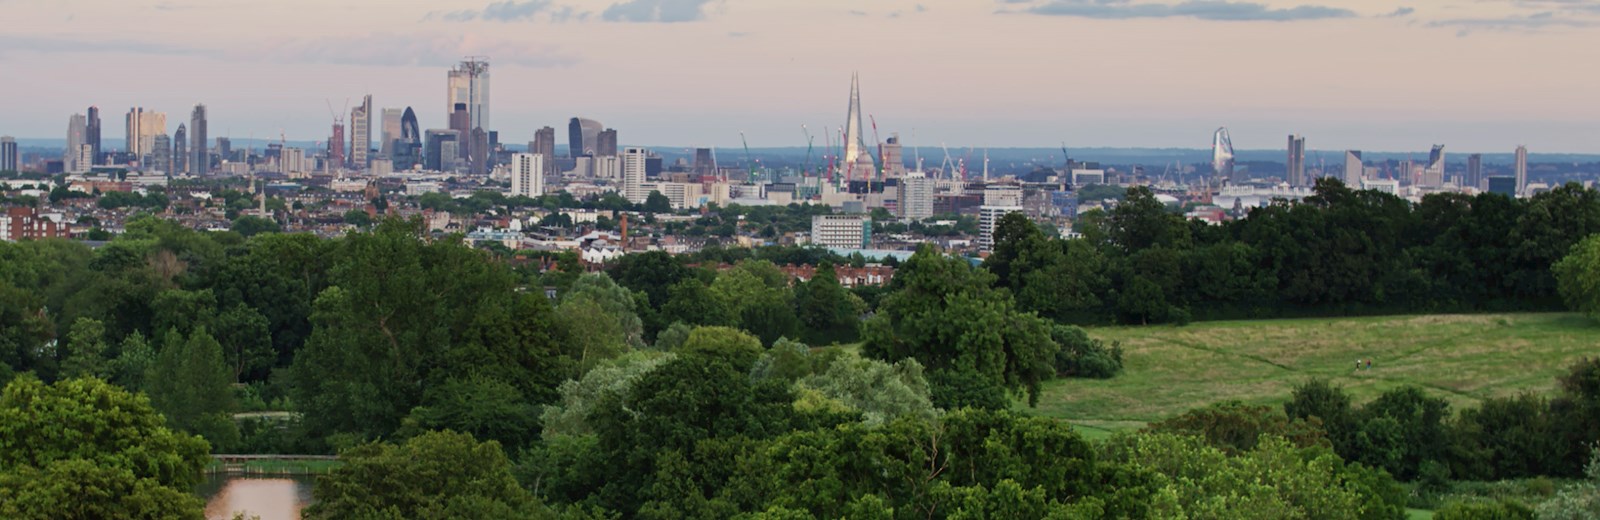 London skyline from a green park